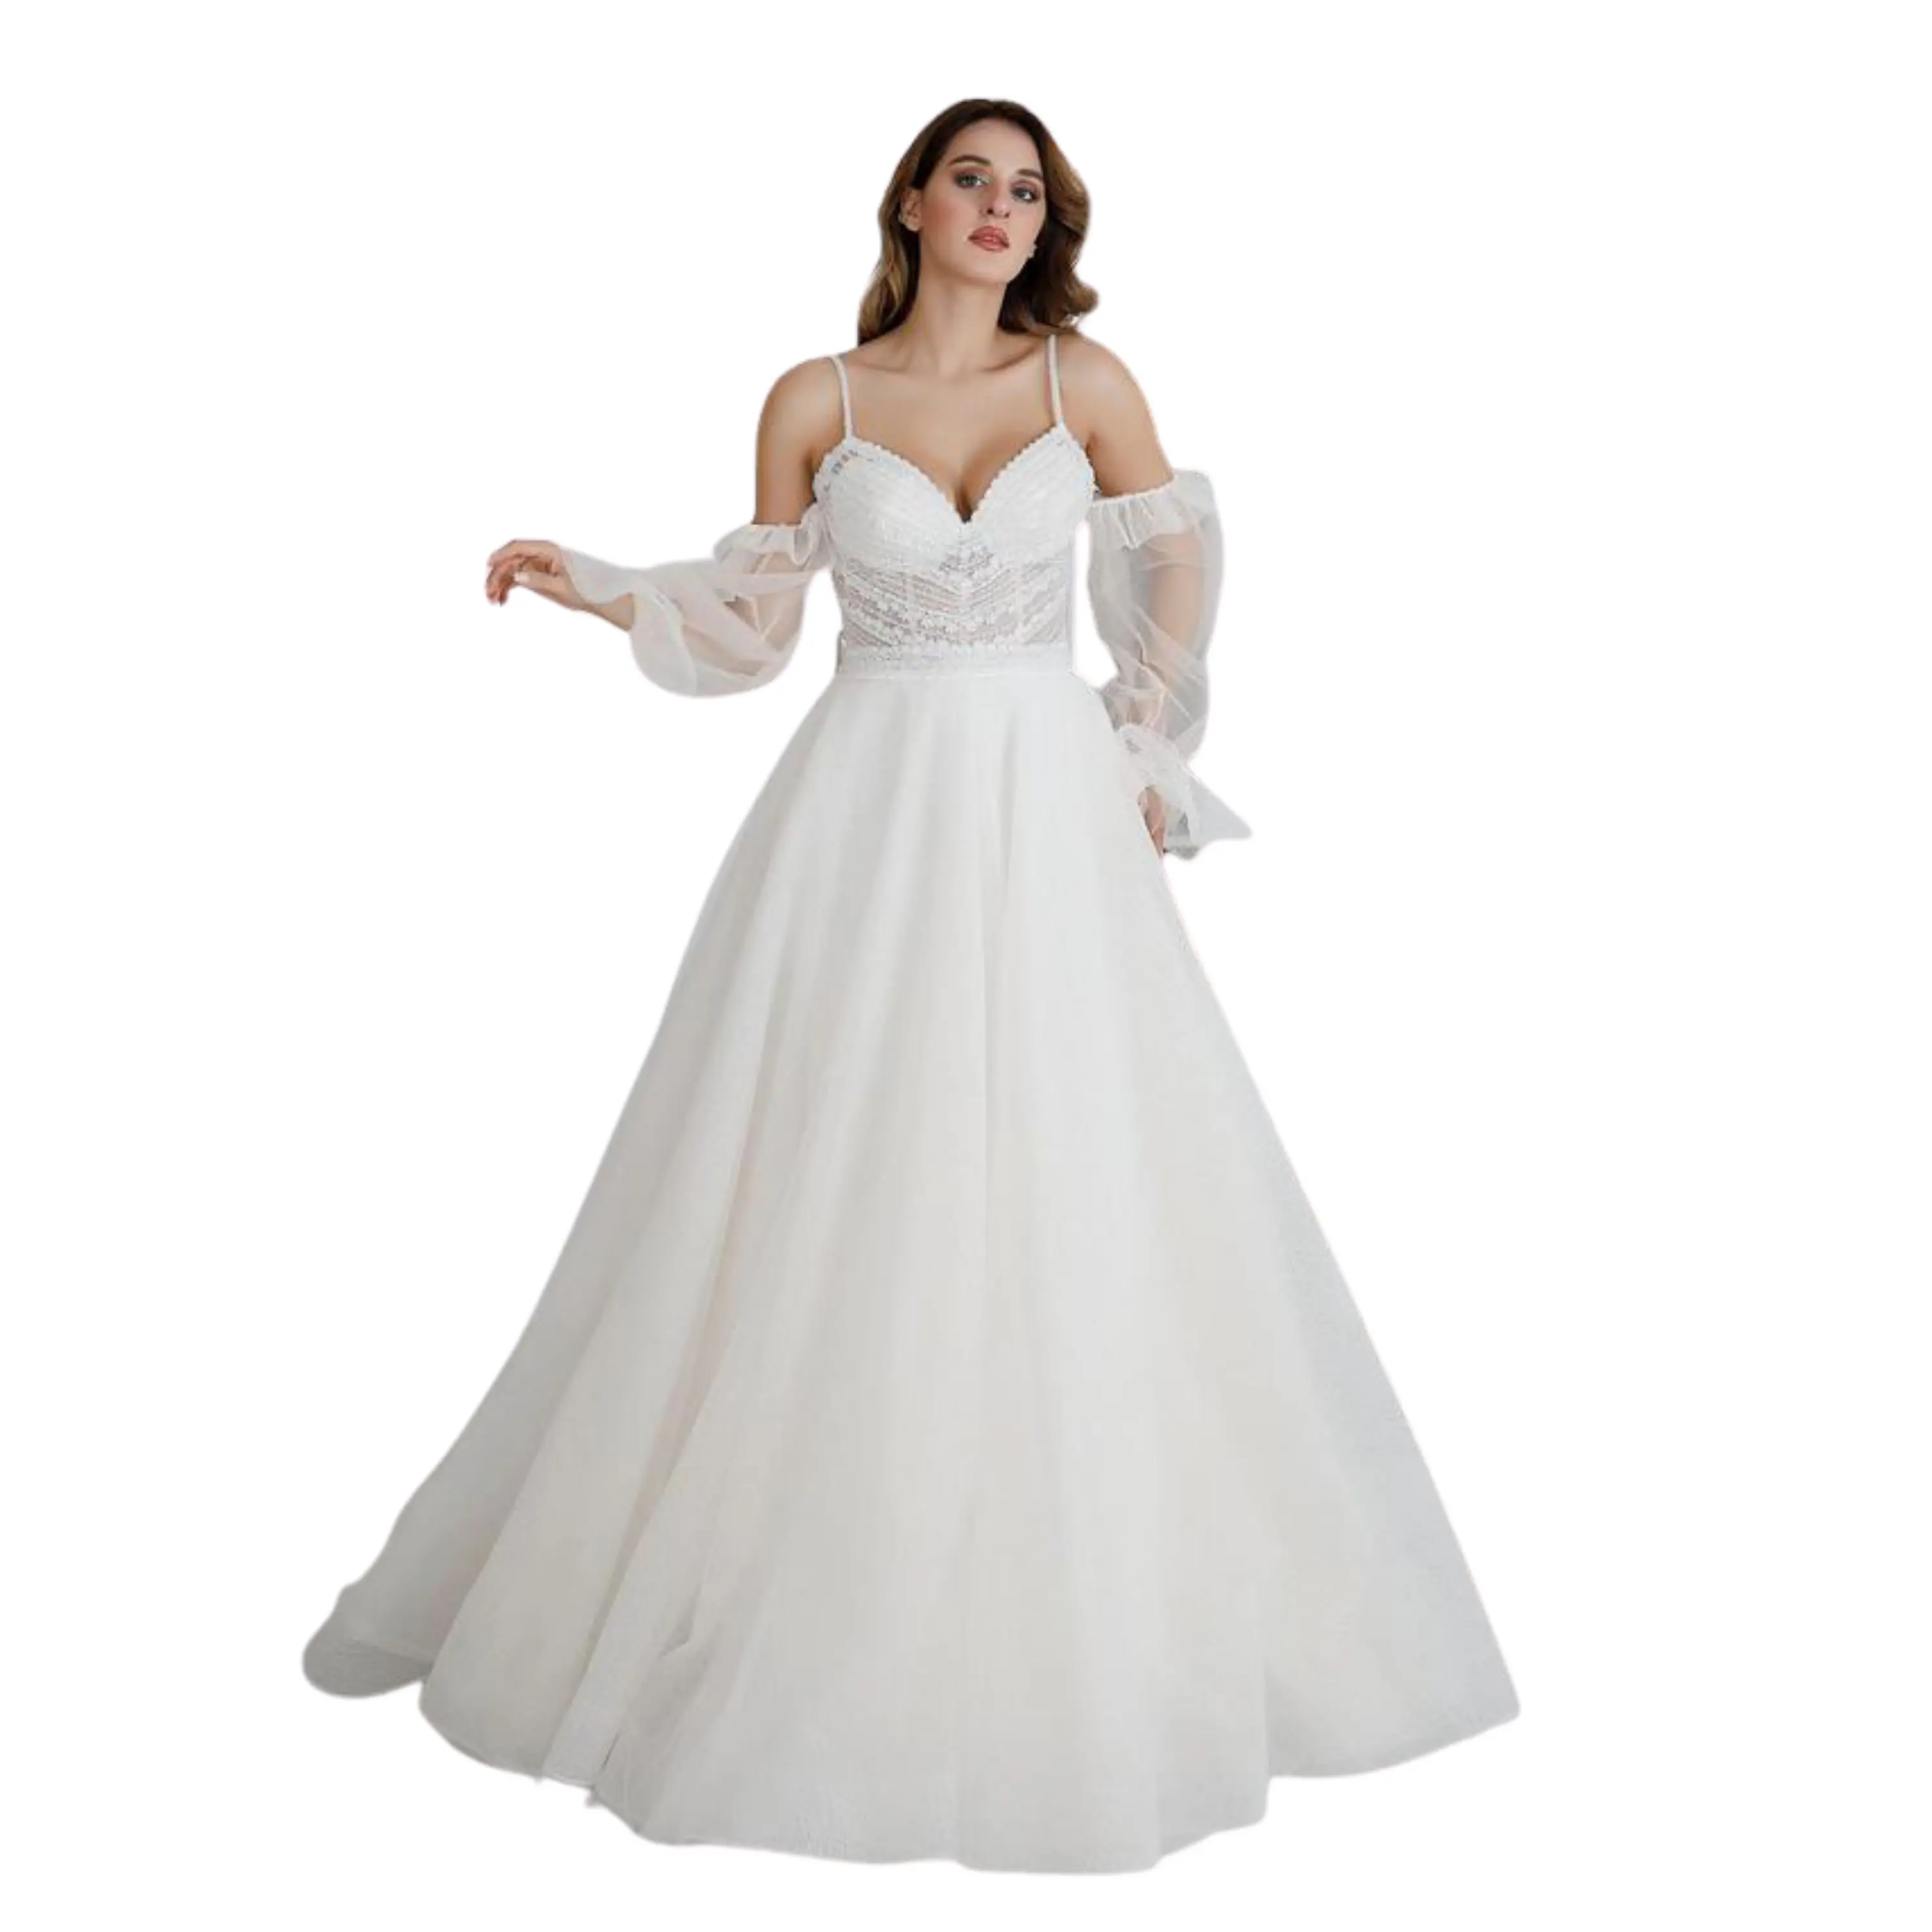 Hot Sale A-Line Wedding Dress Unique Designed Italian Lace Nalans Bridal Quality Fabric Customer Satisfaction Hs16